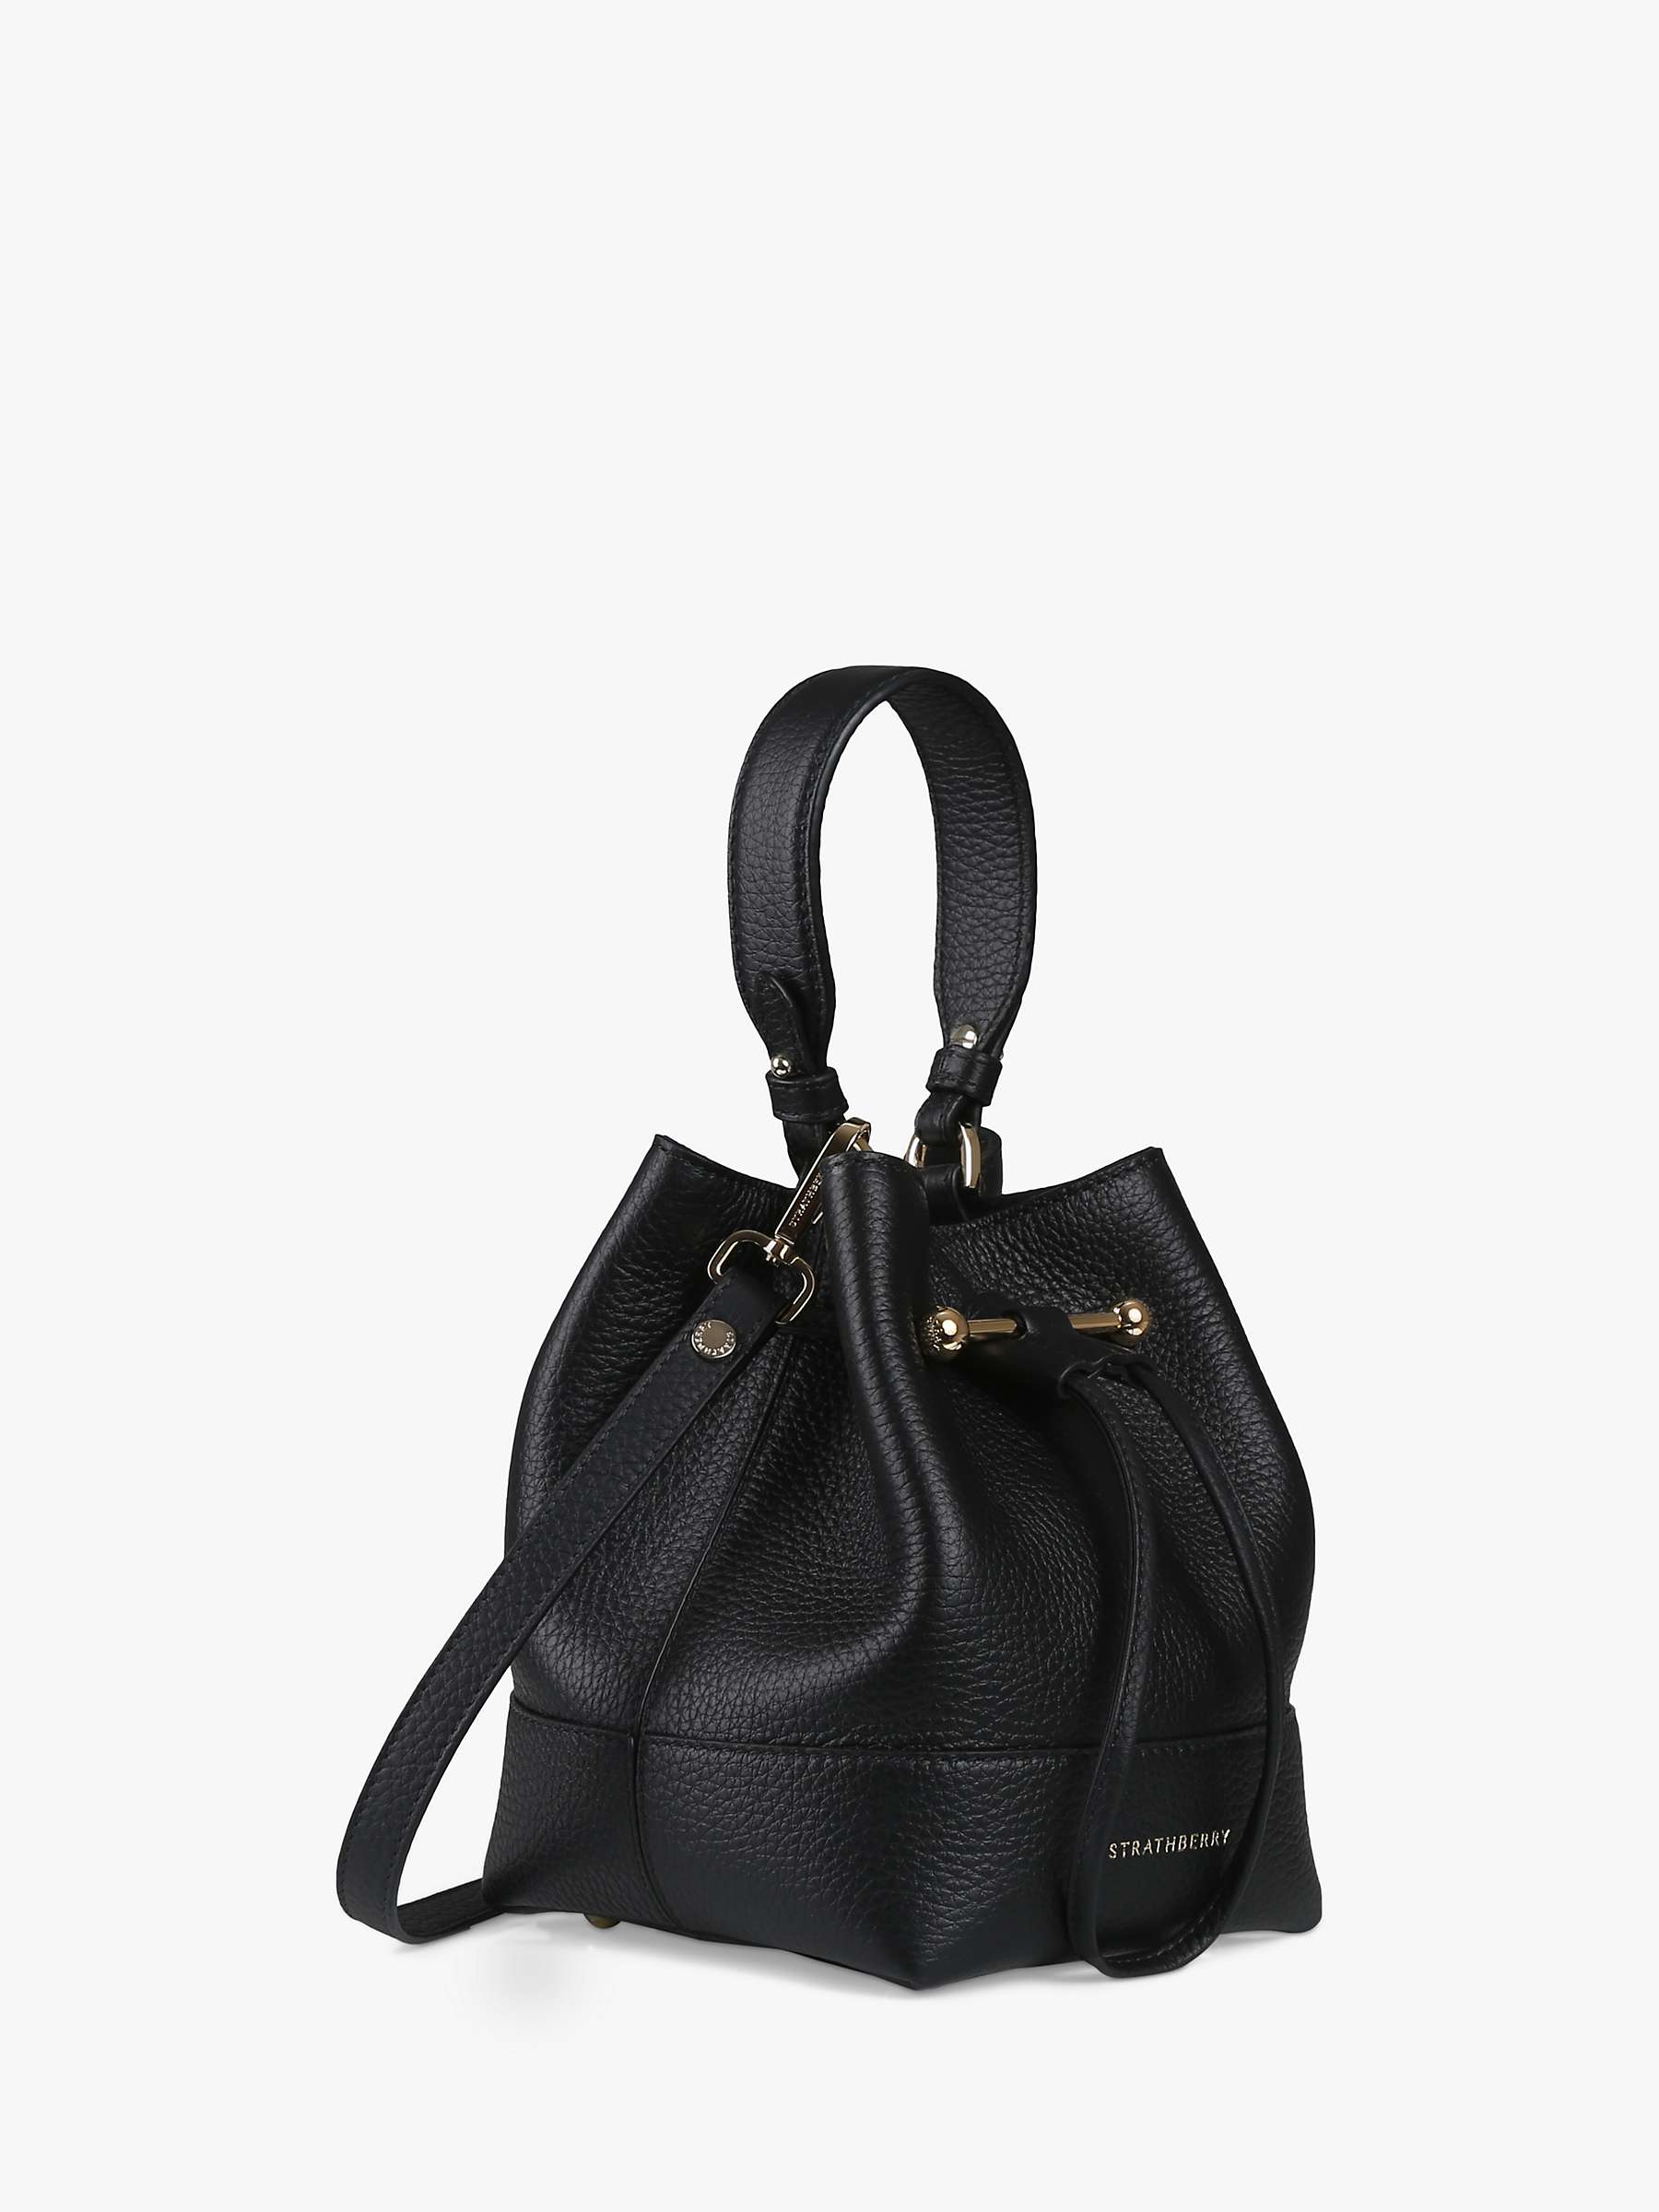 Buy Strathberry Lana Osette Handbag Online at johnlewis.com